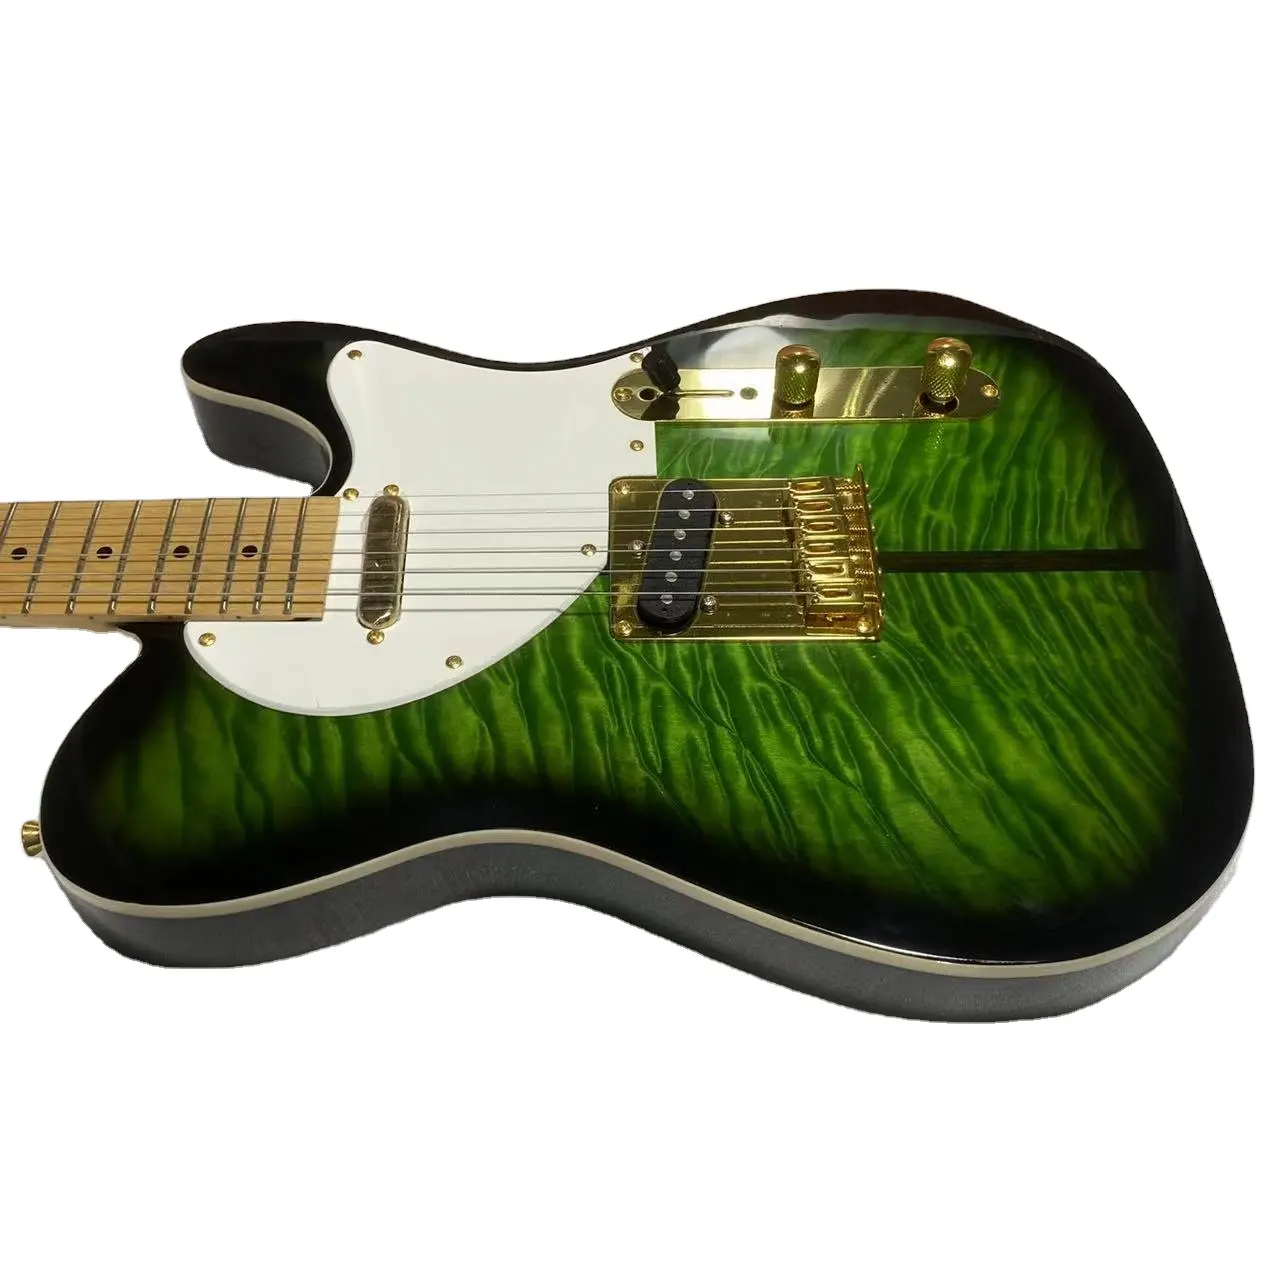 TELE gitar listrik Merle Haggard tanda tangan Tuff anjing hijau warna Burst awan Maple atas perangkat keras emas